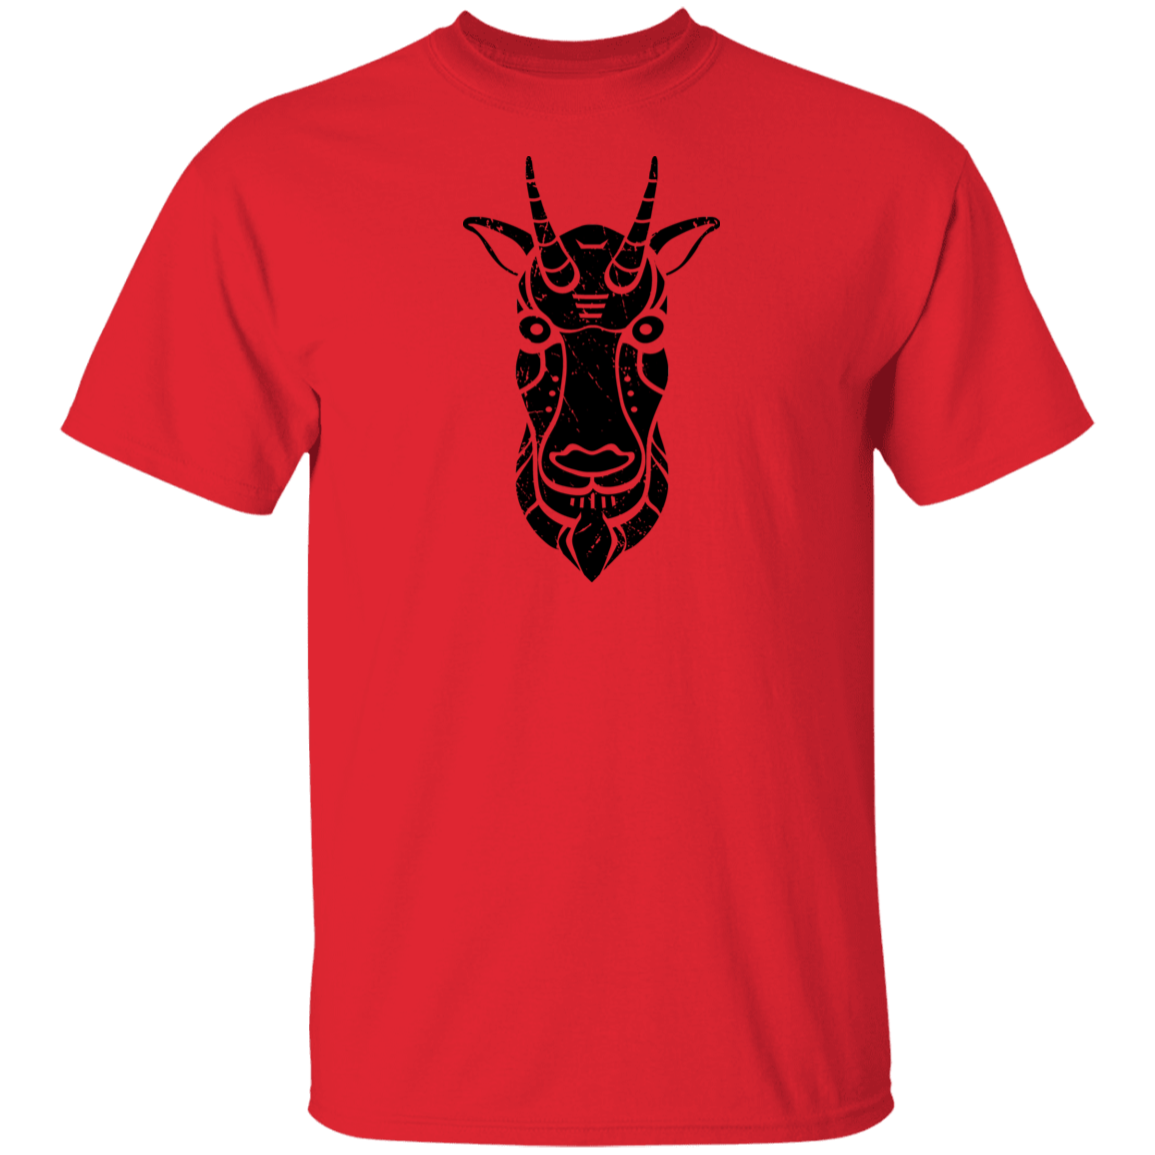 Black Distressed Emblem T-Shirt for Kids (Mountain Goat/Rainier)